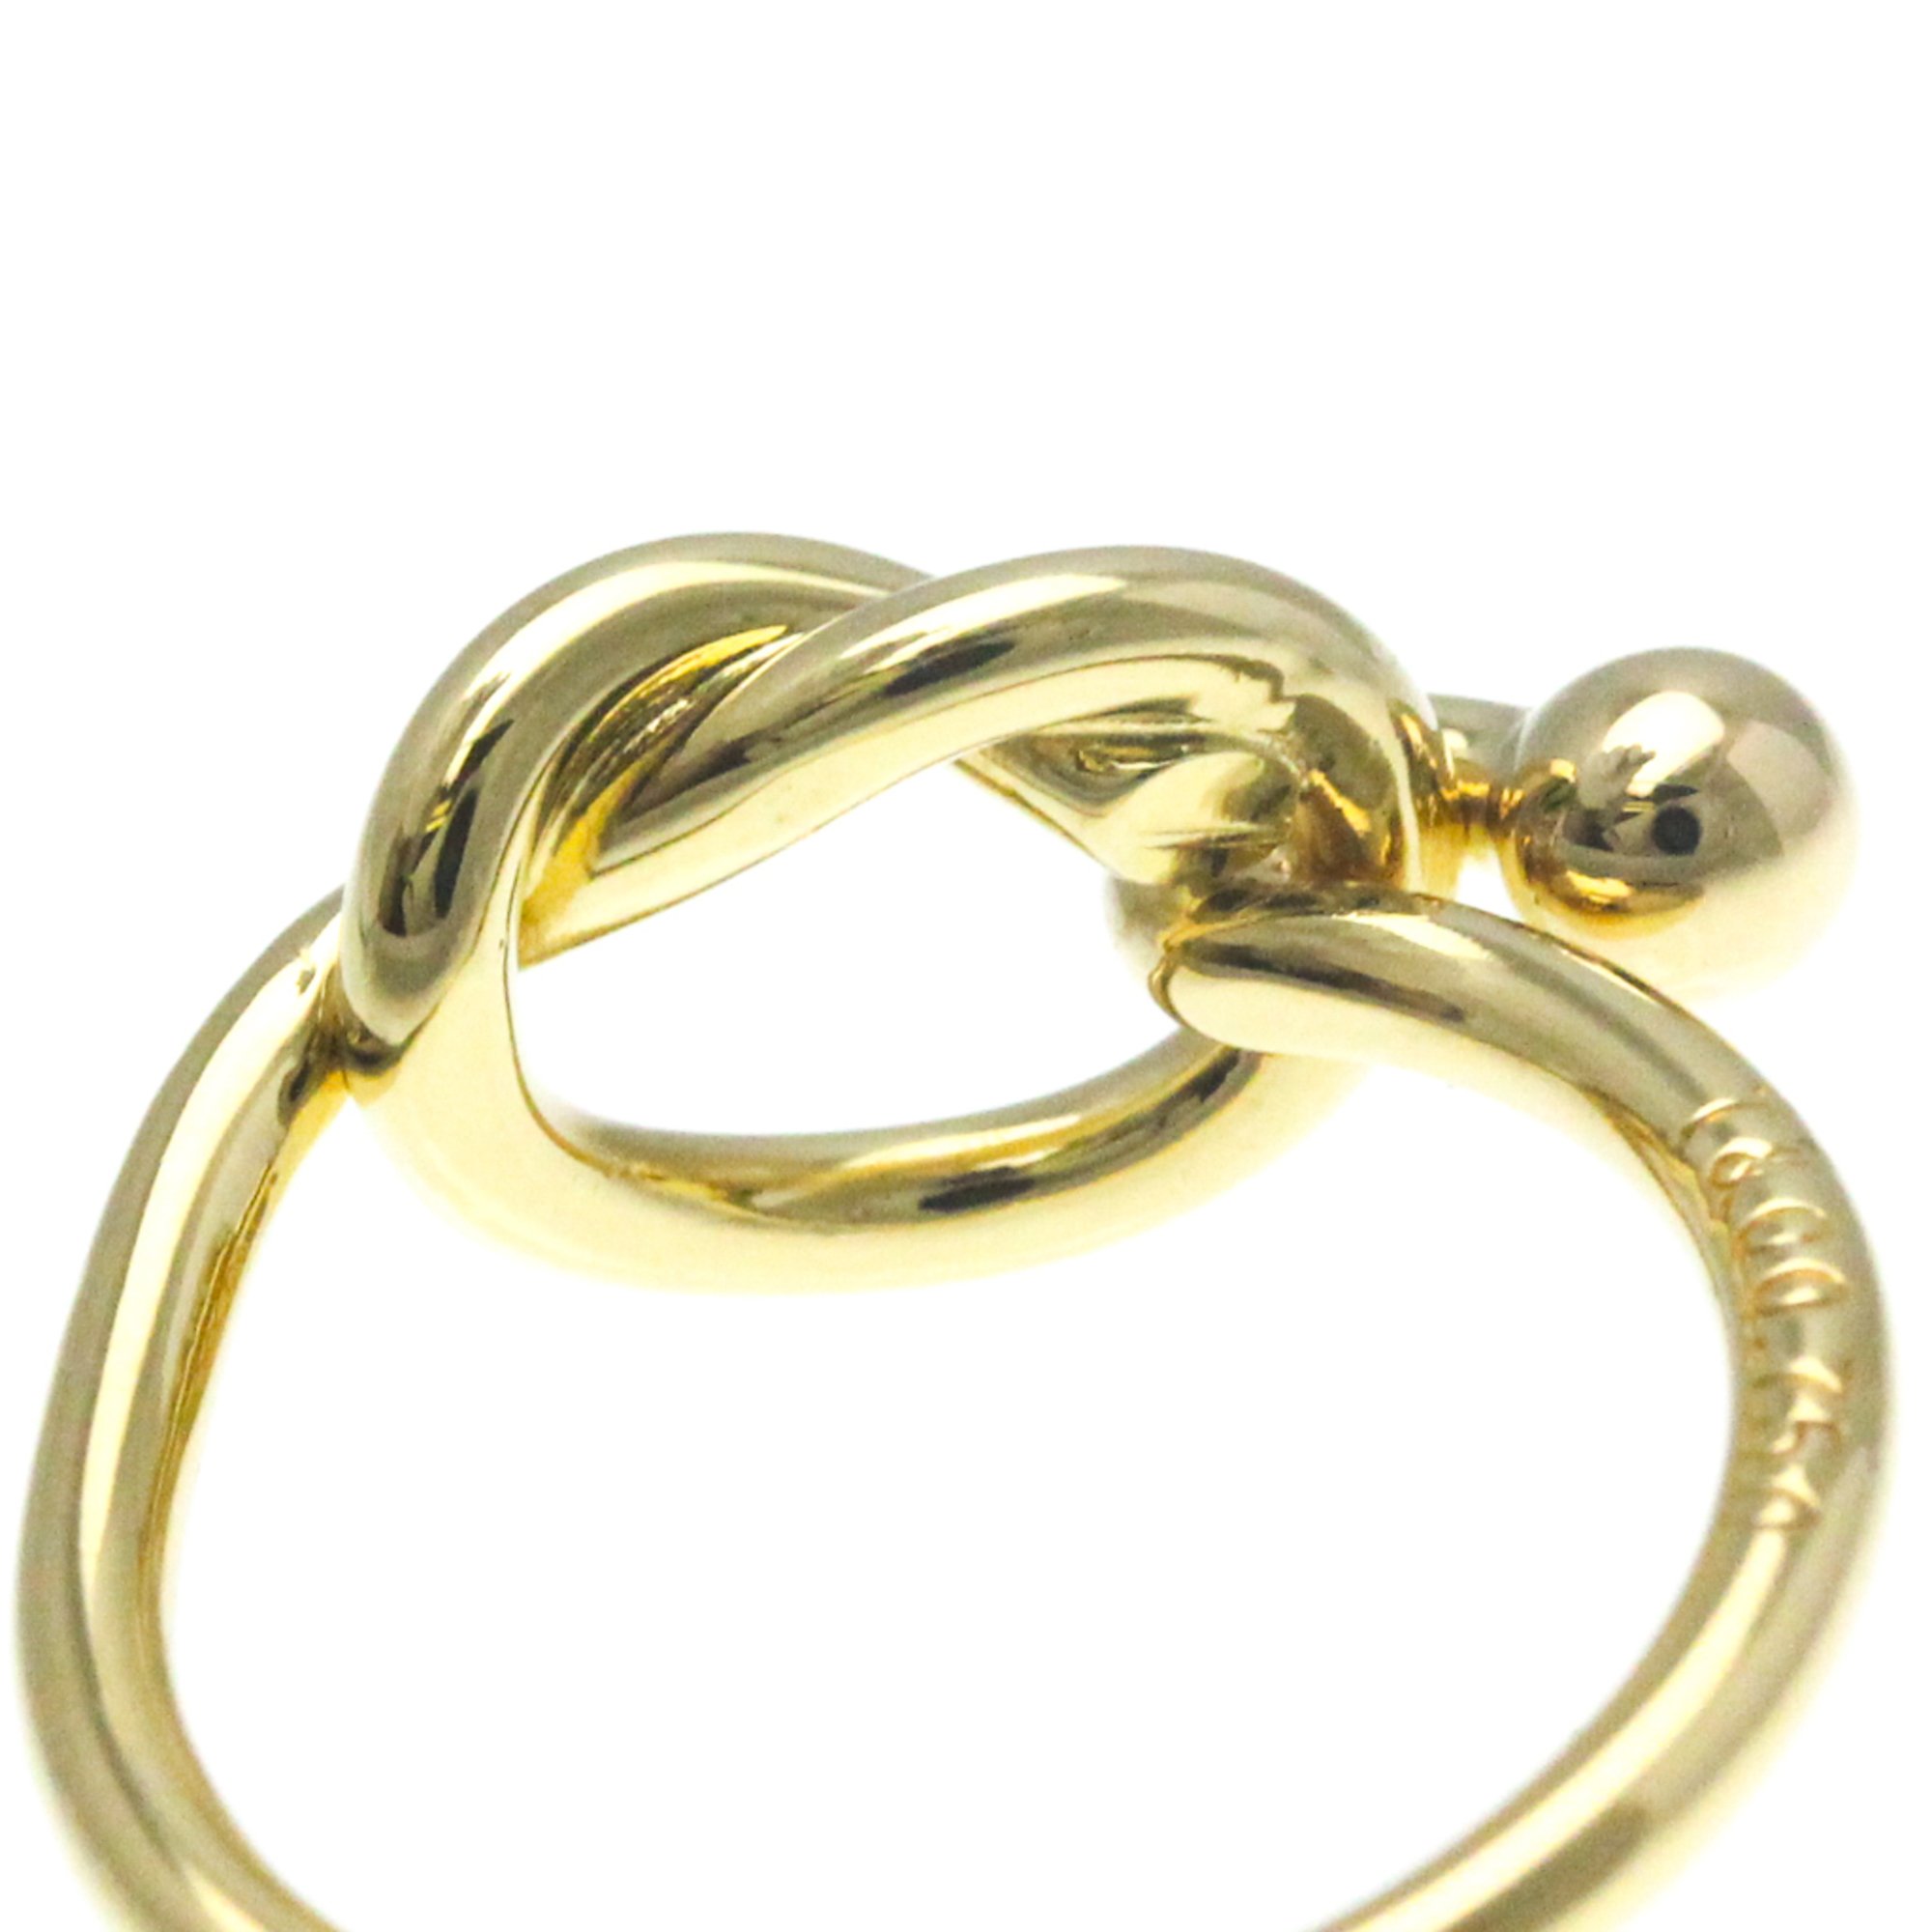 Tiffany Knot Ring Yellow Gold (18K) Fashion No Stone Band Ring Gold